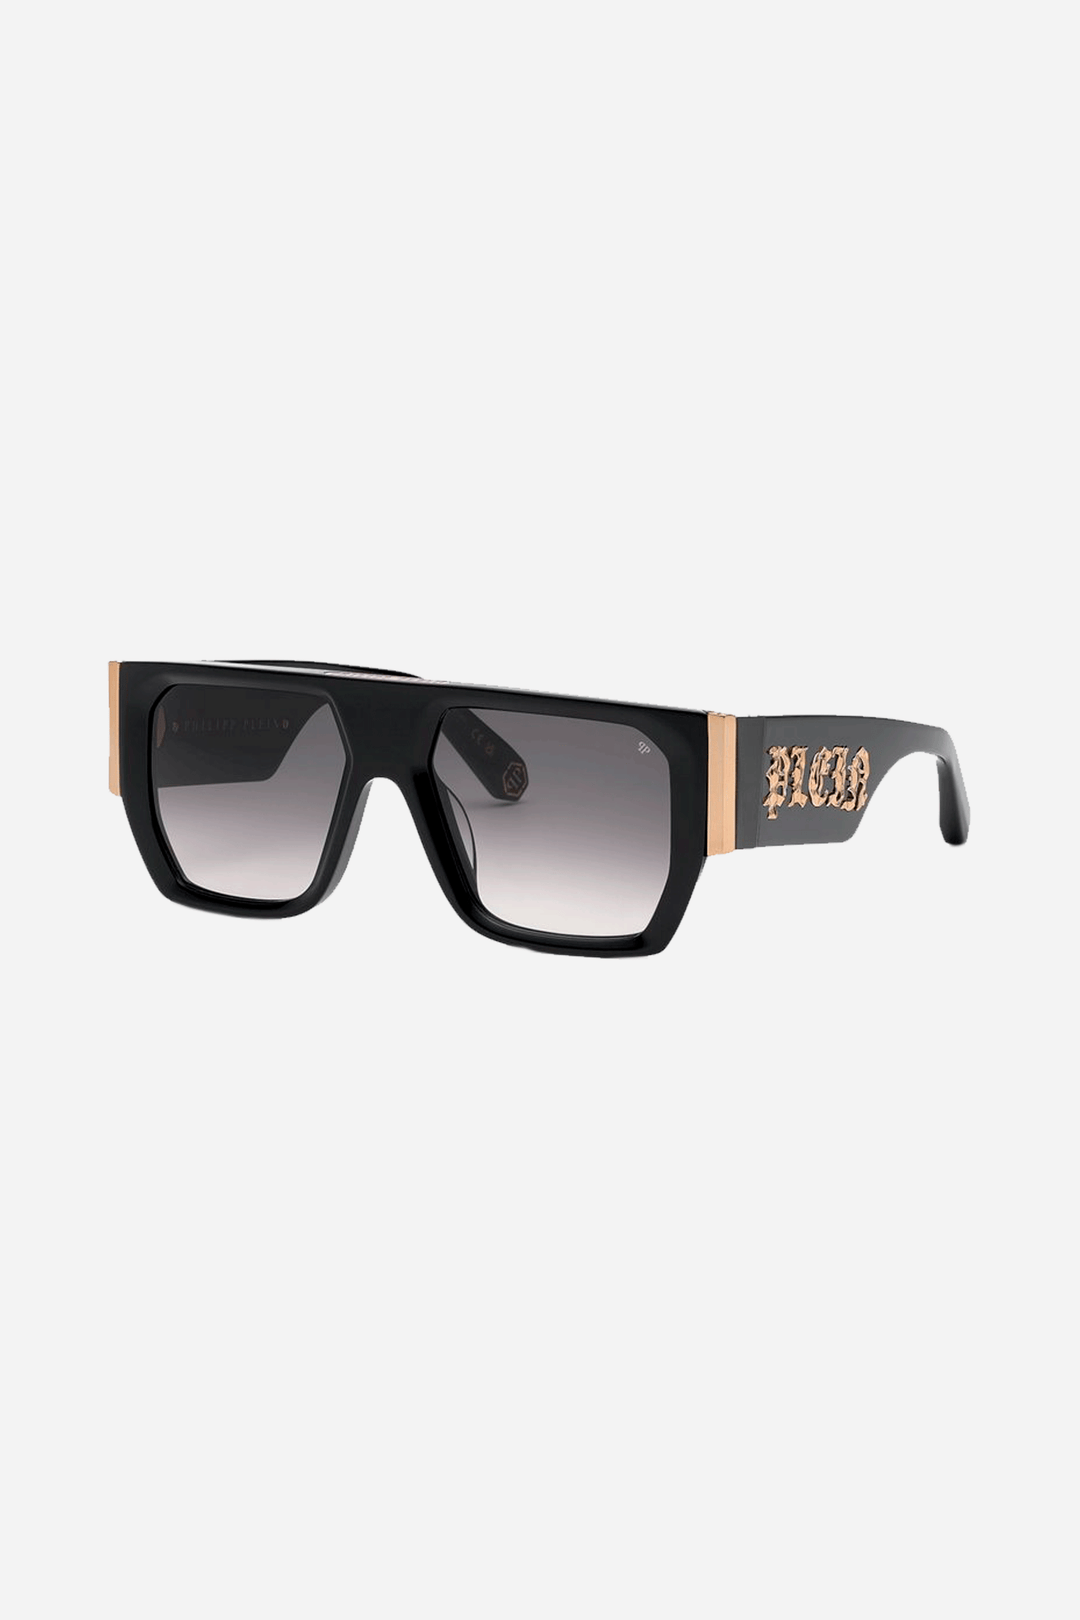 Philipp Plein flat top black sunglasses - Eyewear Club